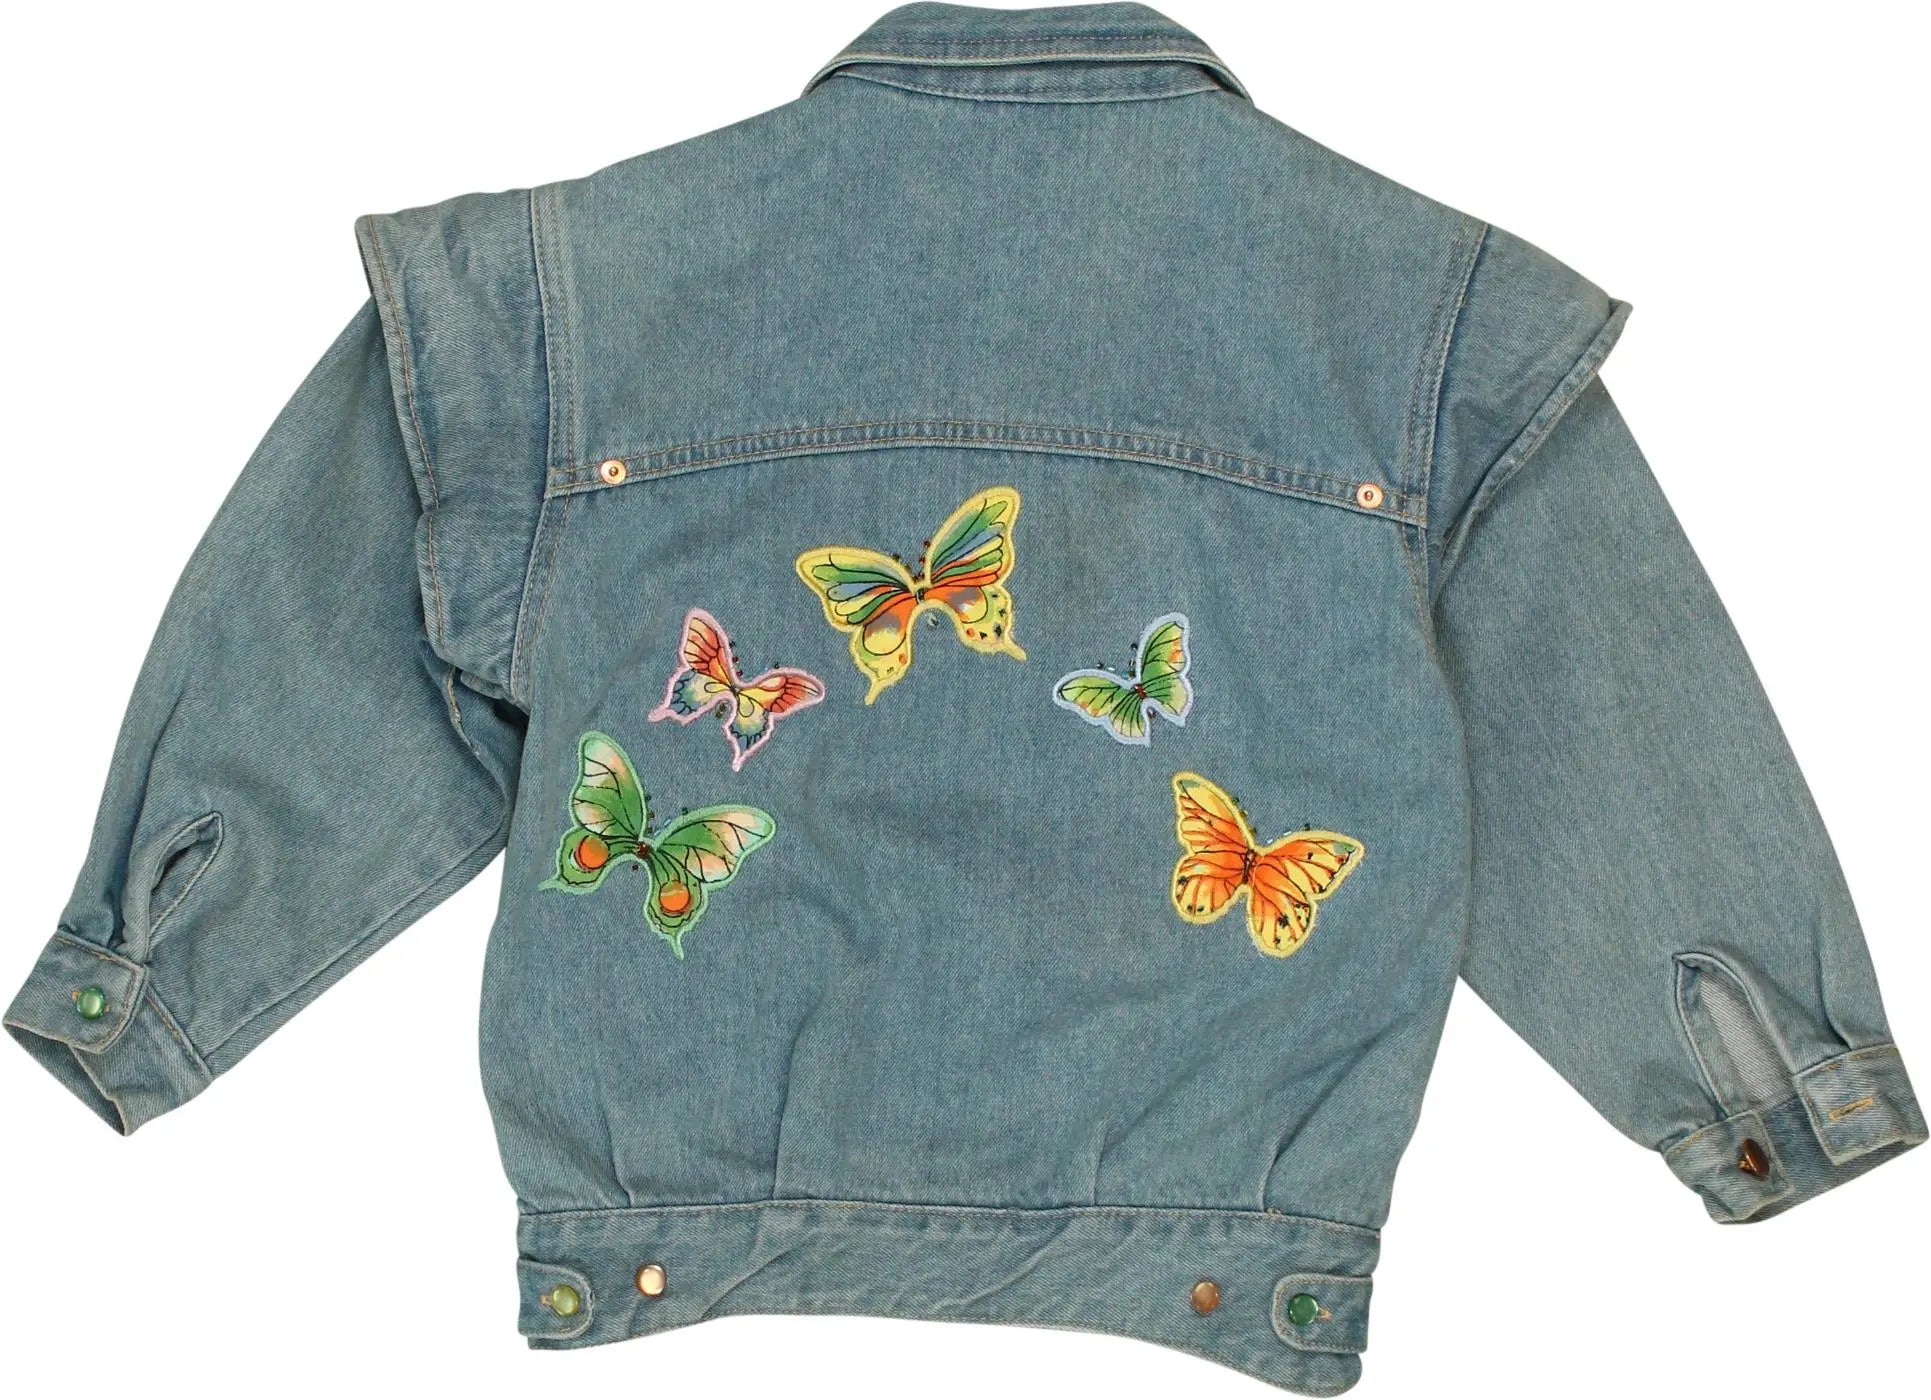 Peng - Denim Jacket- ThriftTale.com - Vintage and second handclothing